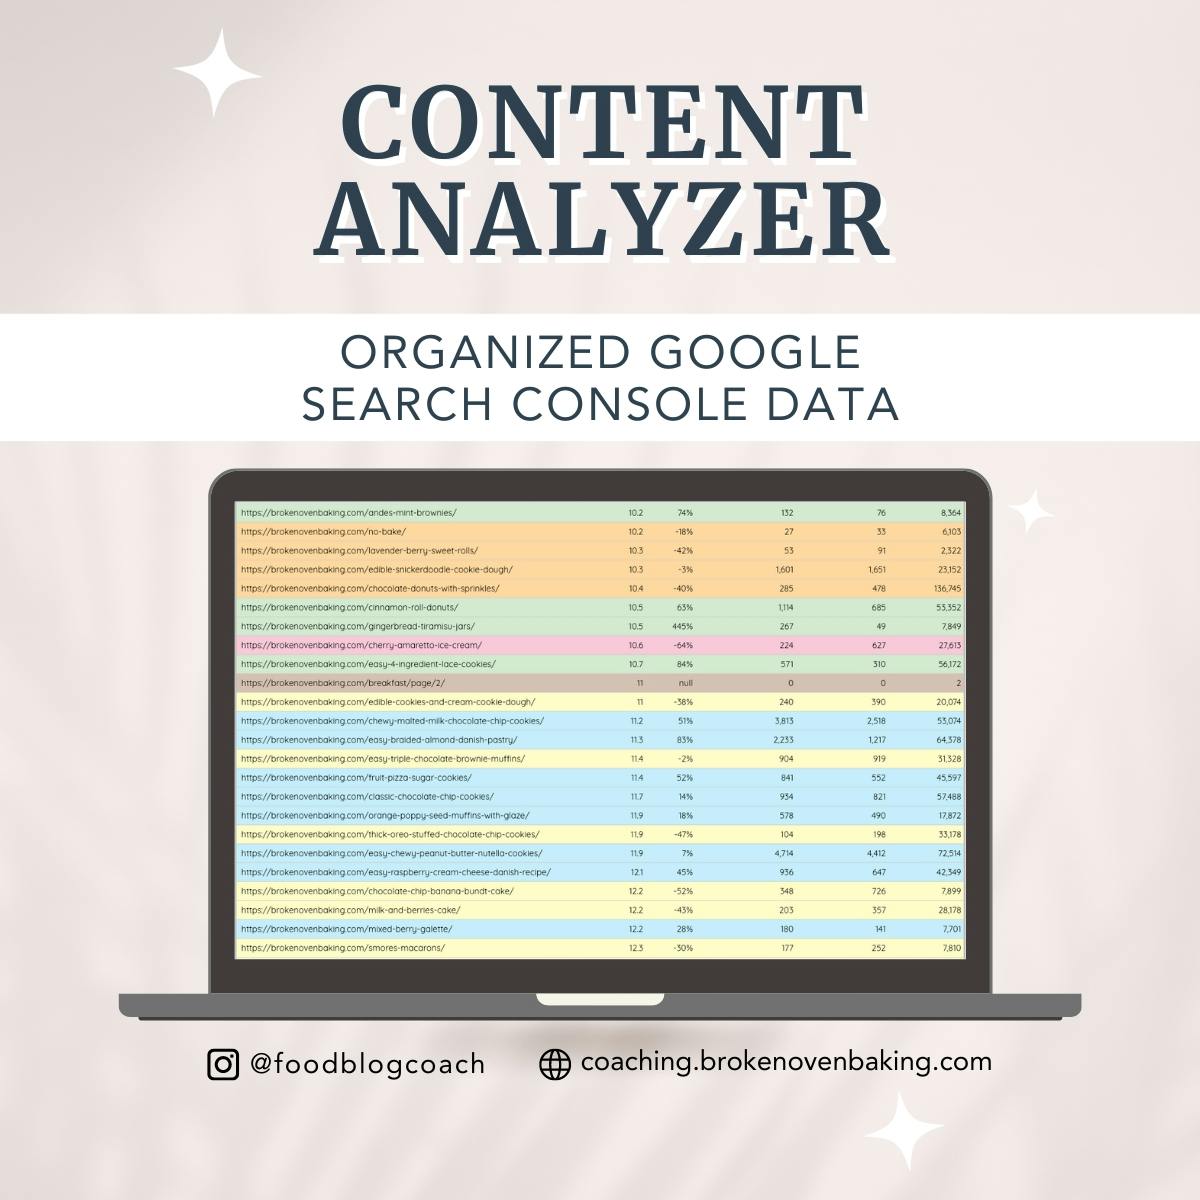 Content Analyzer